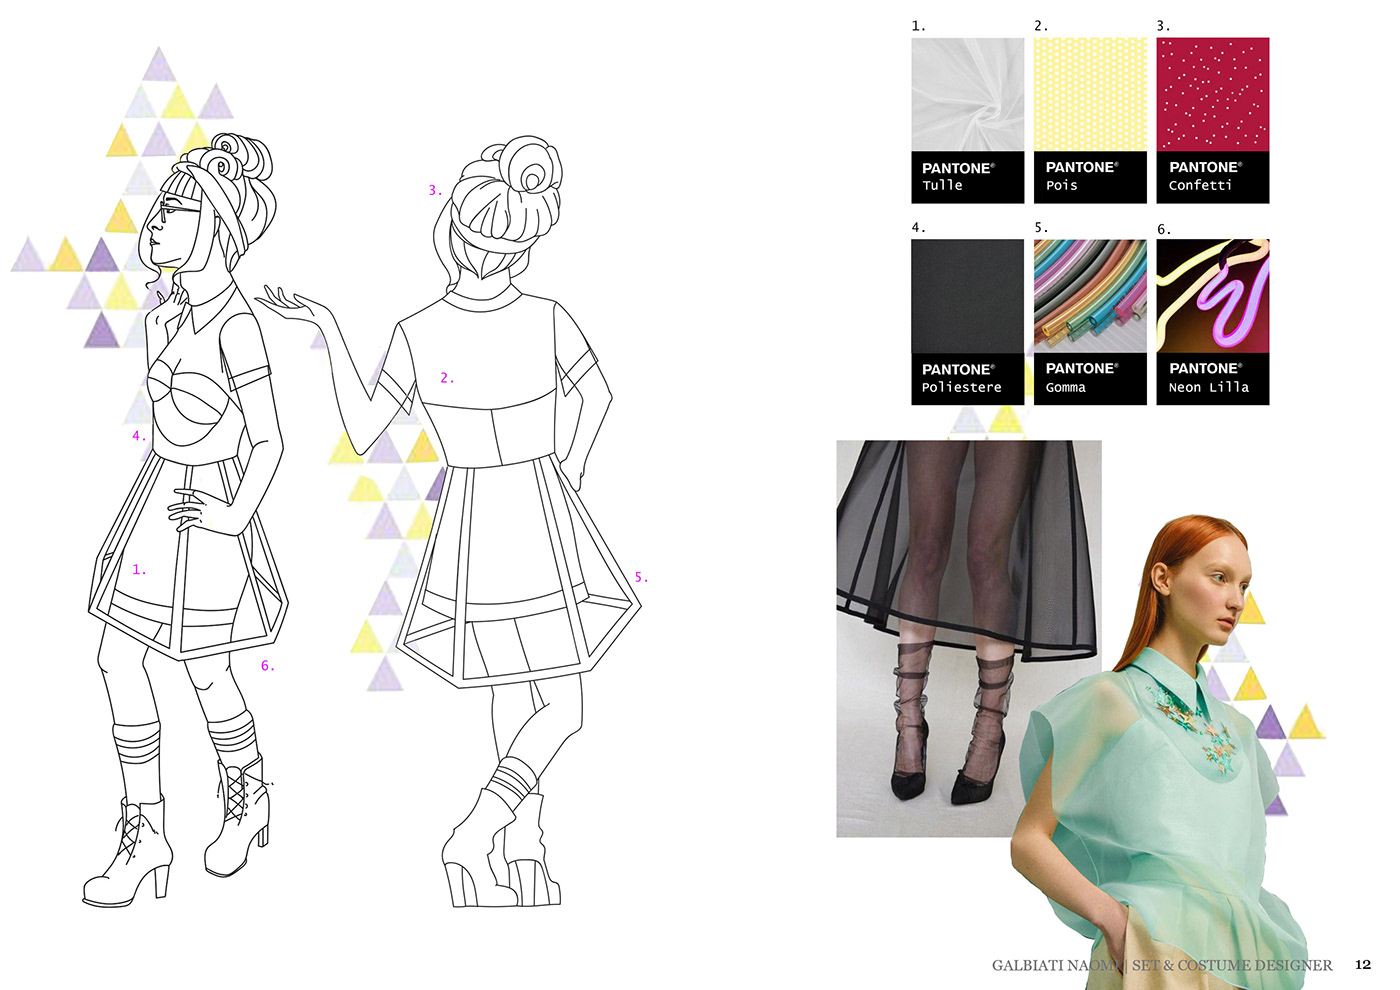 kinglear shakespeare dragqueen costumedesign characterdesign Drawing  digital illustration sketch adobe illustrator designer